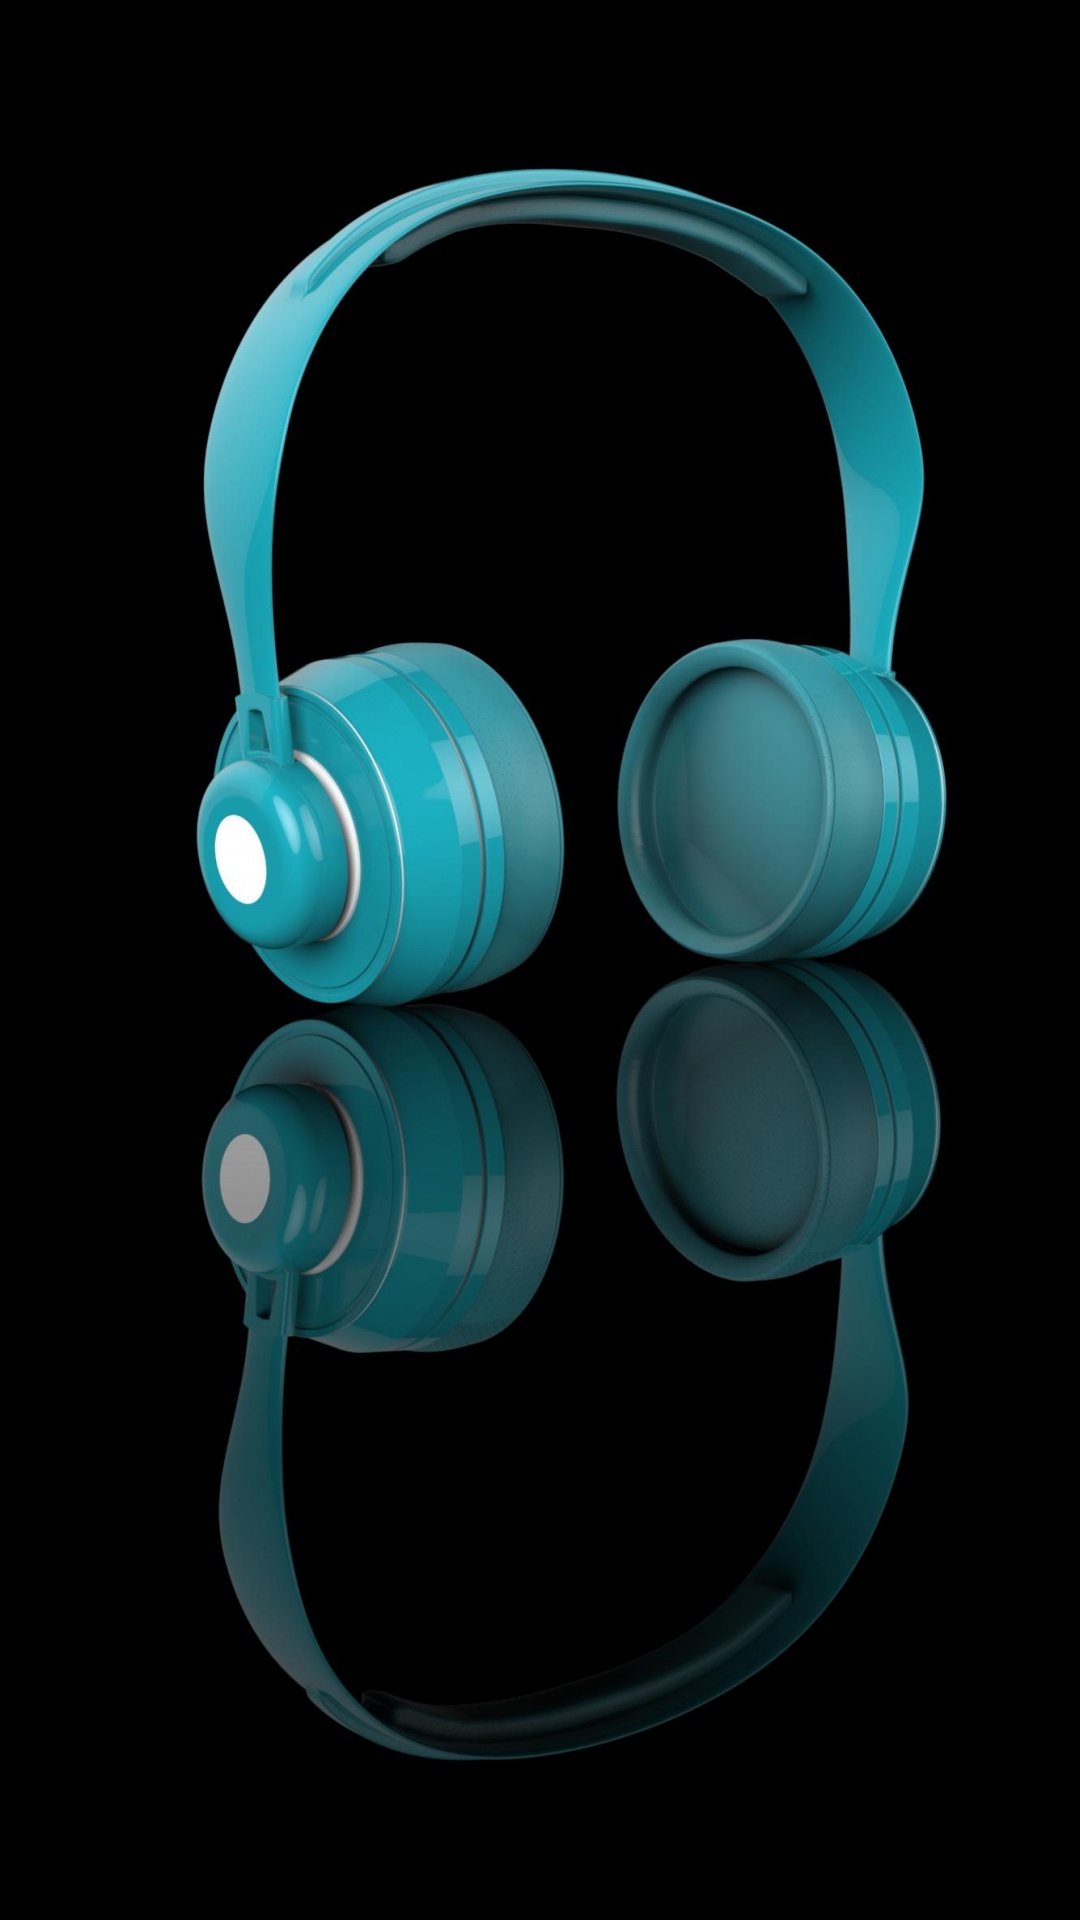 Headphones, Audio Equipment, Audio Signal, Turquoise, Green. Wallpaper in 1080x1920 Resolution